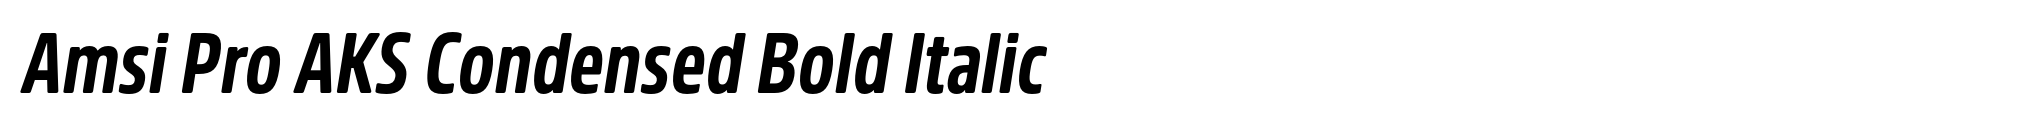 Amsi Pro AKS Condensed Bold Italic image